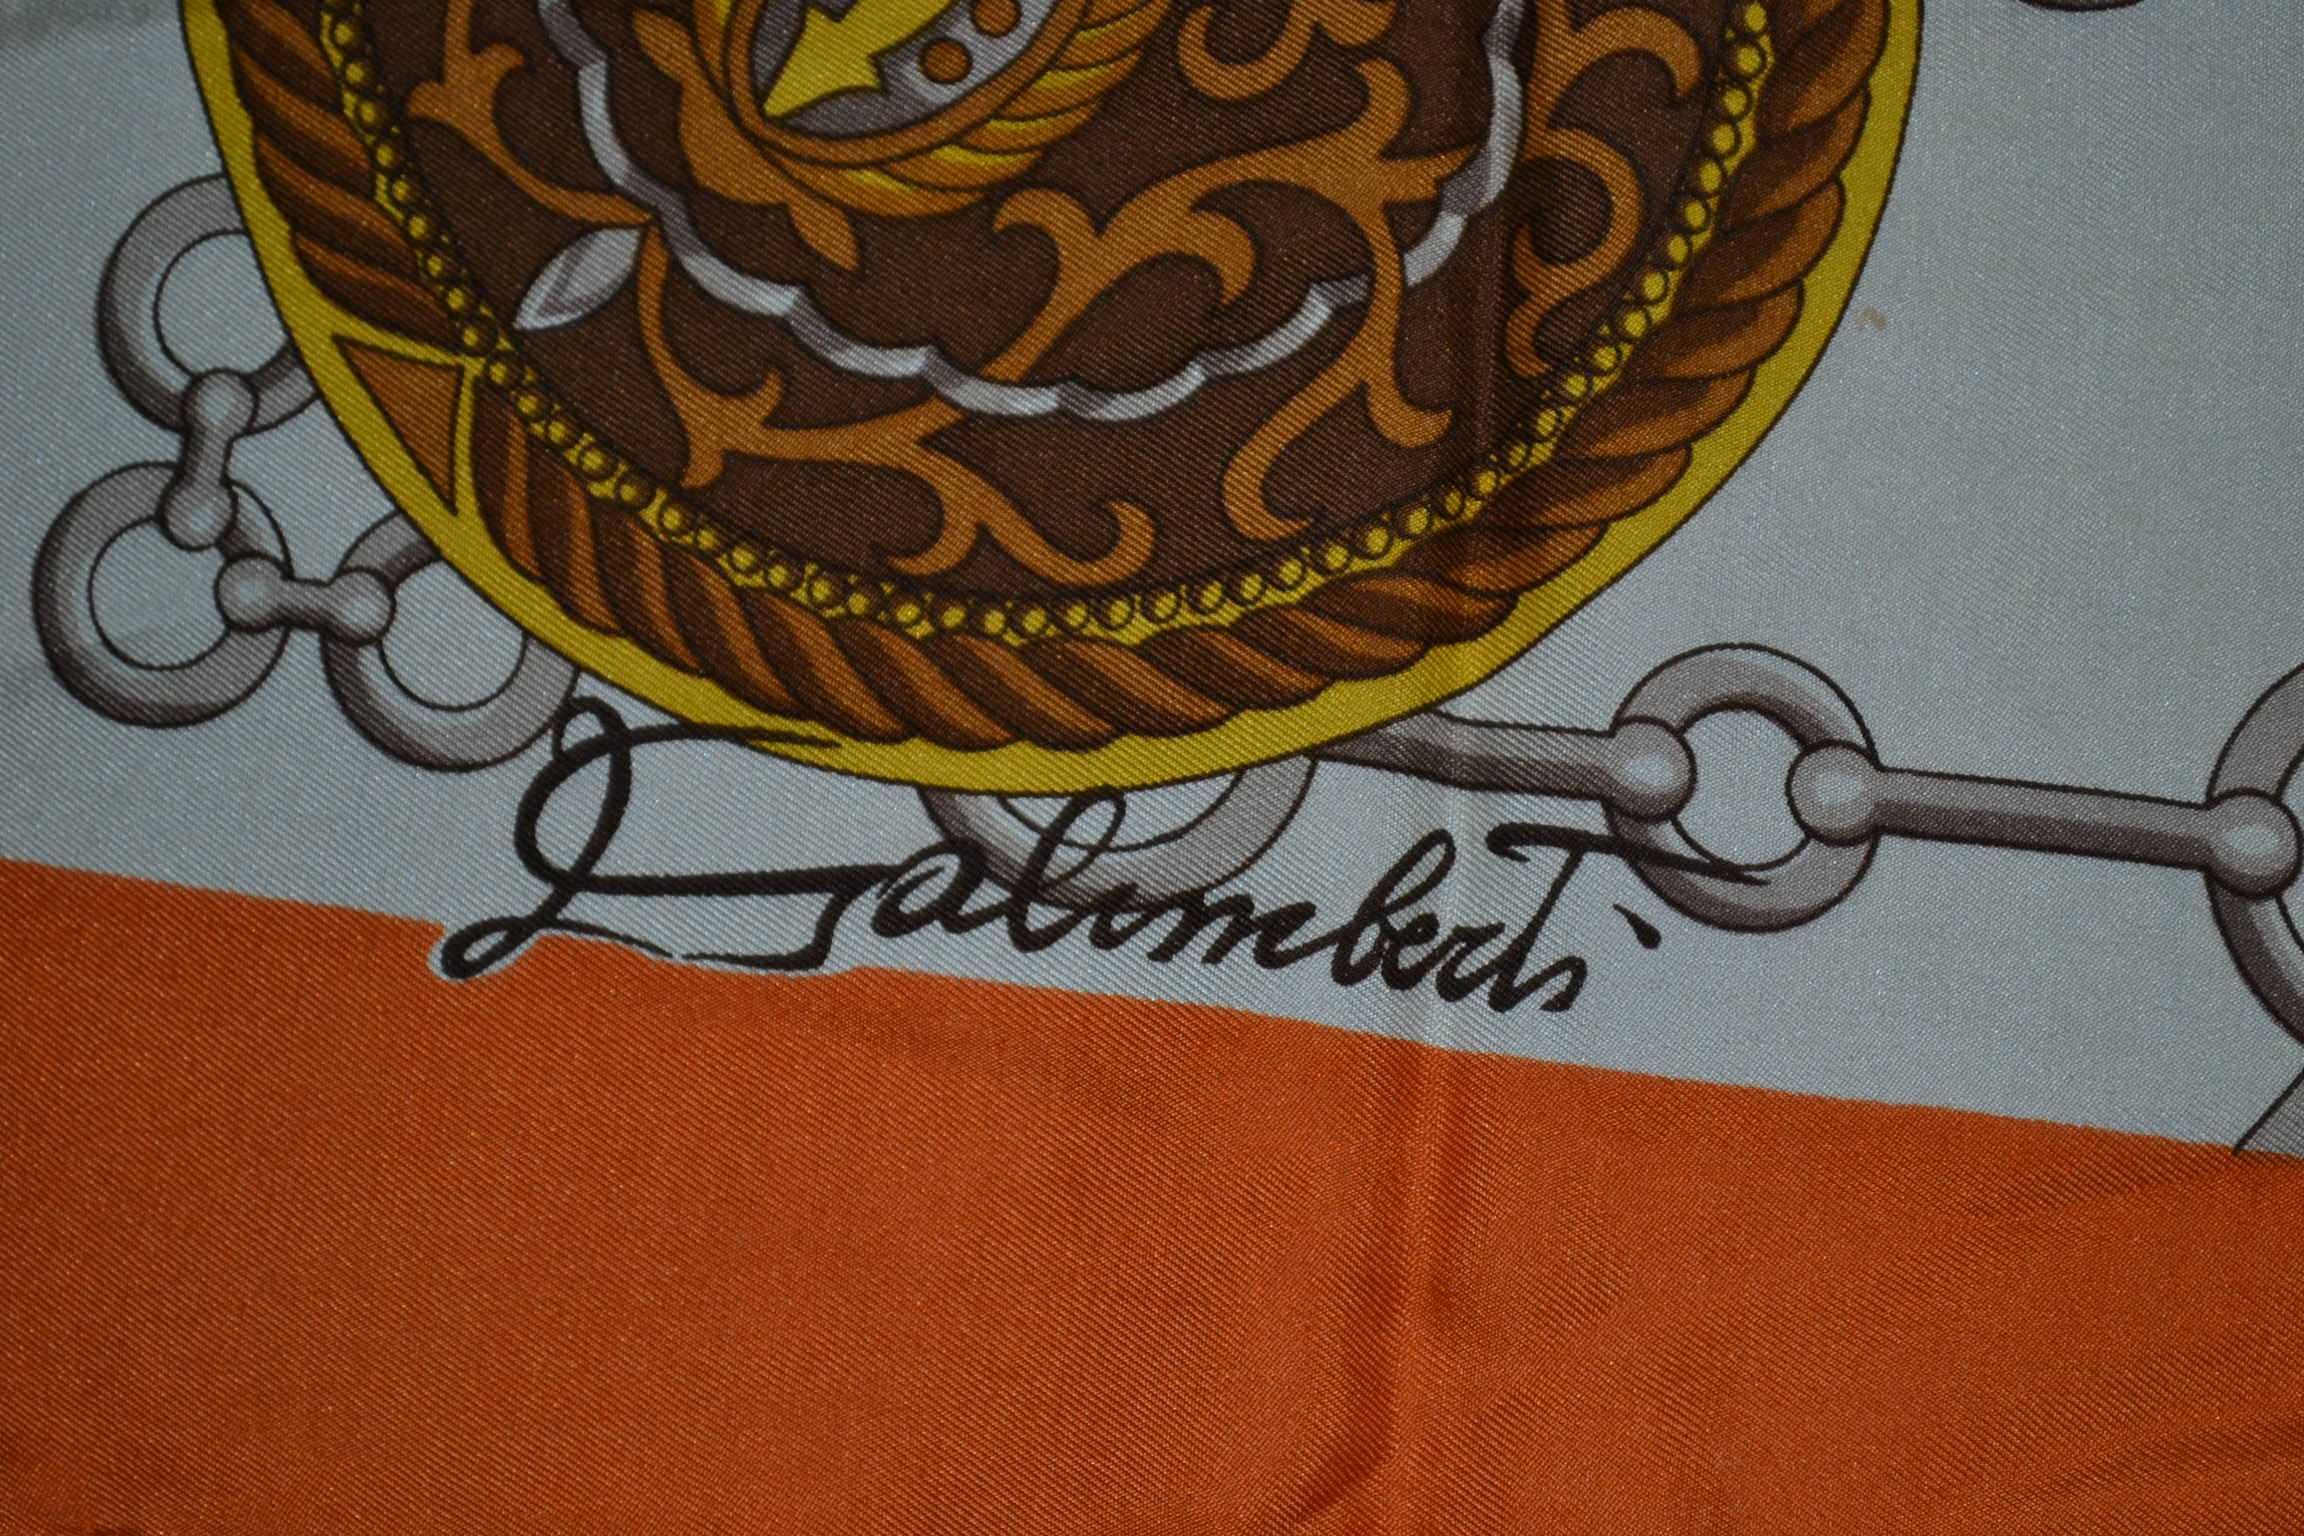 L Galimberti шелковый платок шаль палантин оригинал